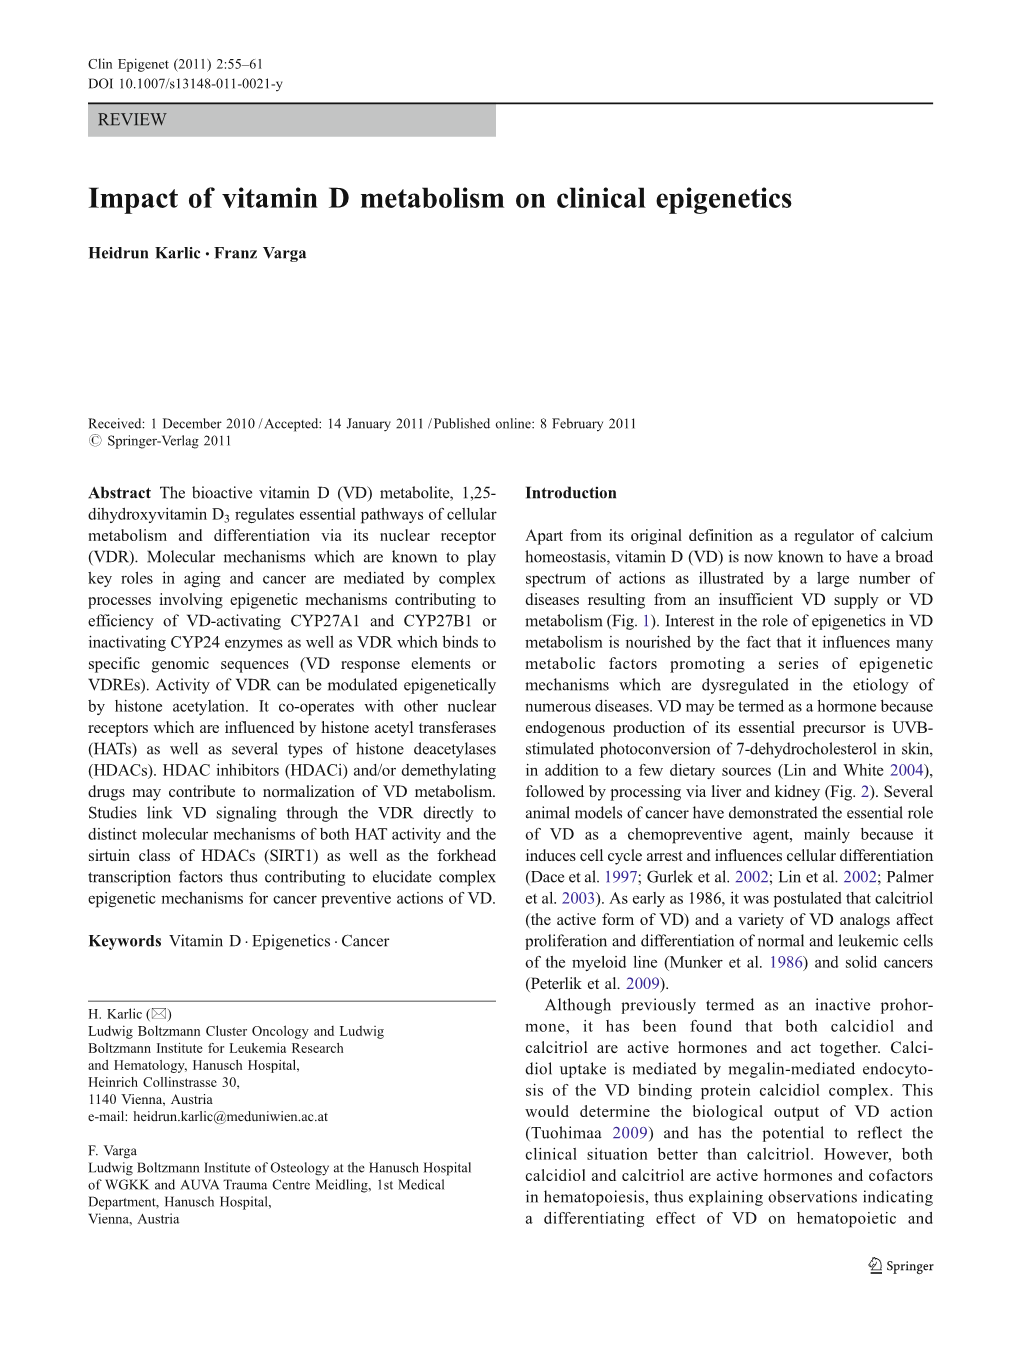 Impact of Vitamin D Metabolism on Clinical Epigenetics